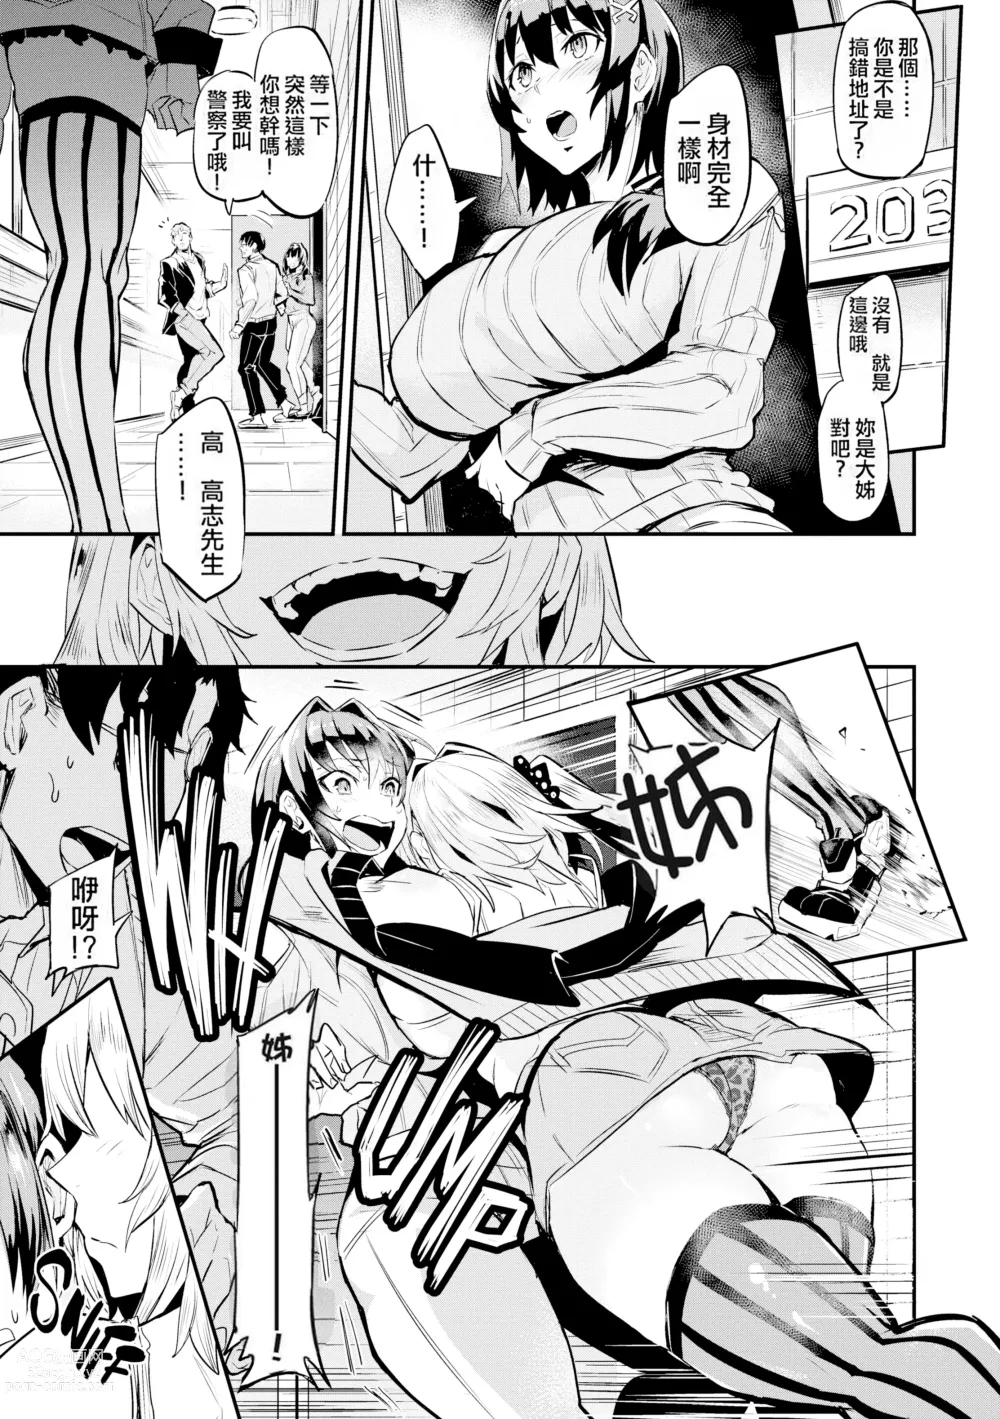 Page 8 of manga ヒトリジメ